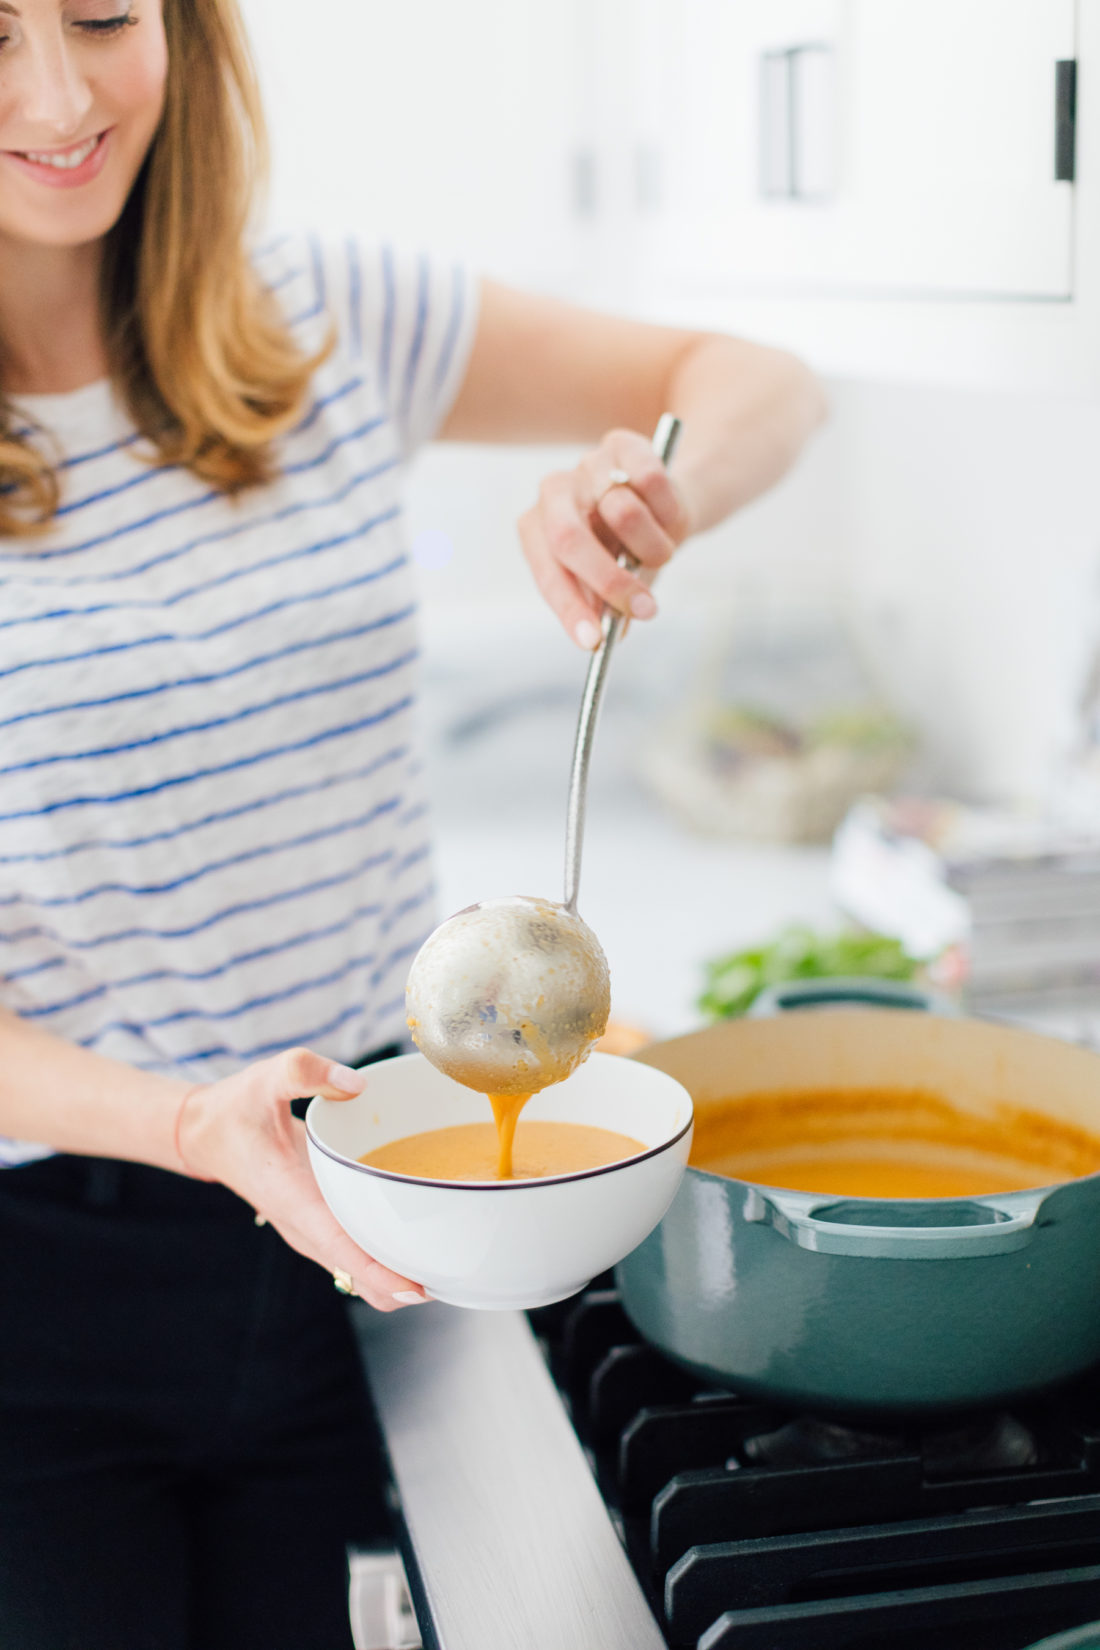 Eva Amurri Martino ladles her Heirloom Tomato Soup into a bowl